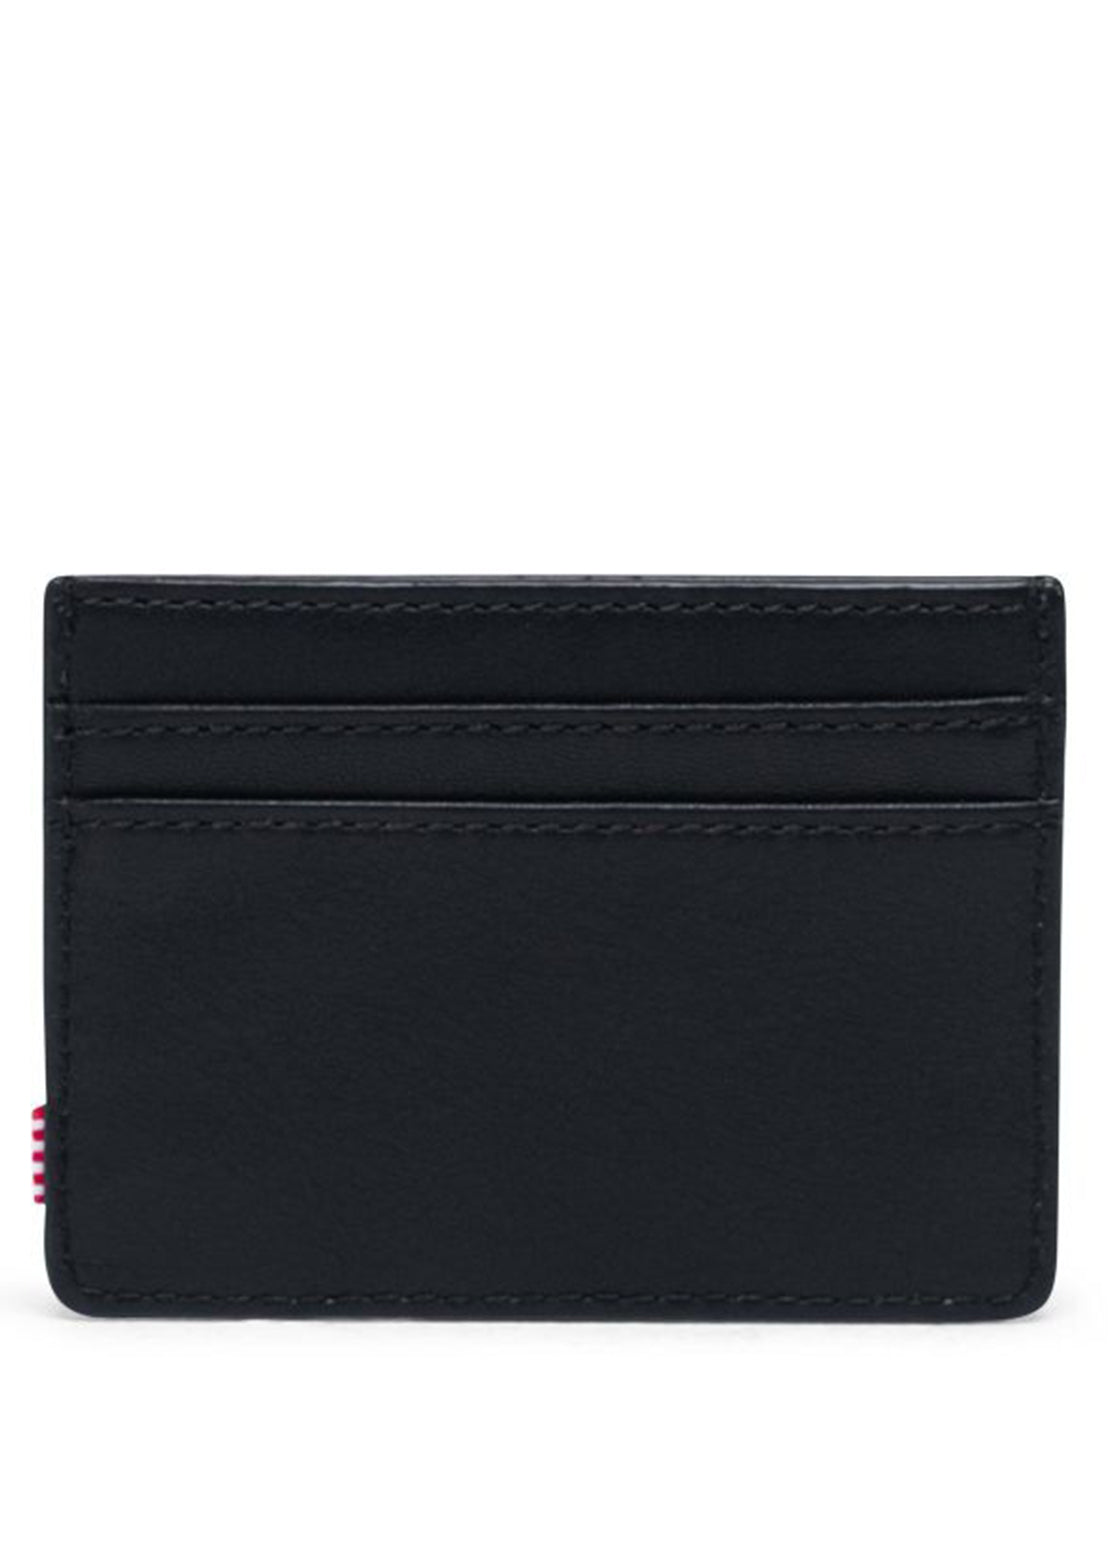 Herschel Charlie Leather Wallet Black